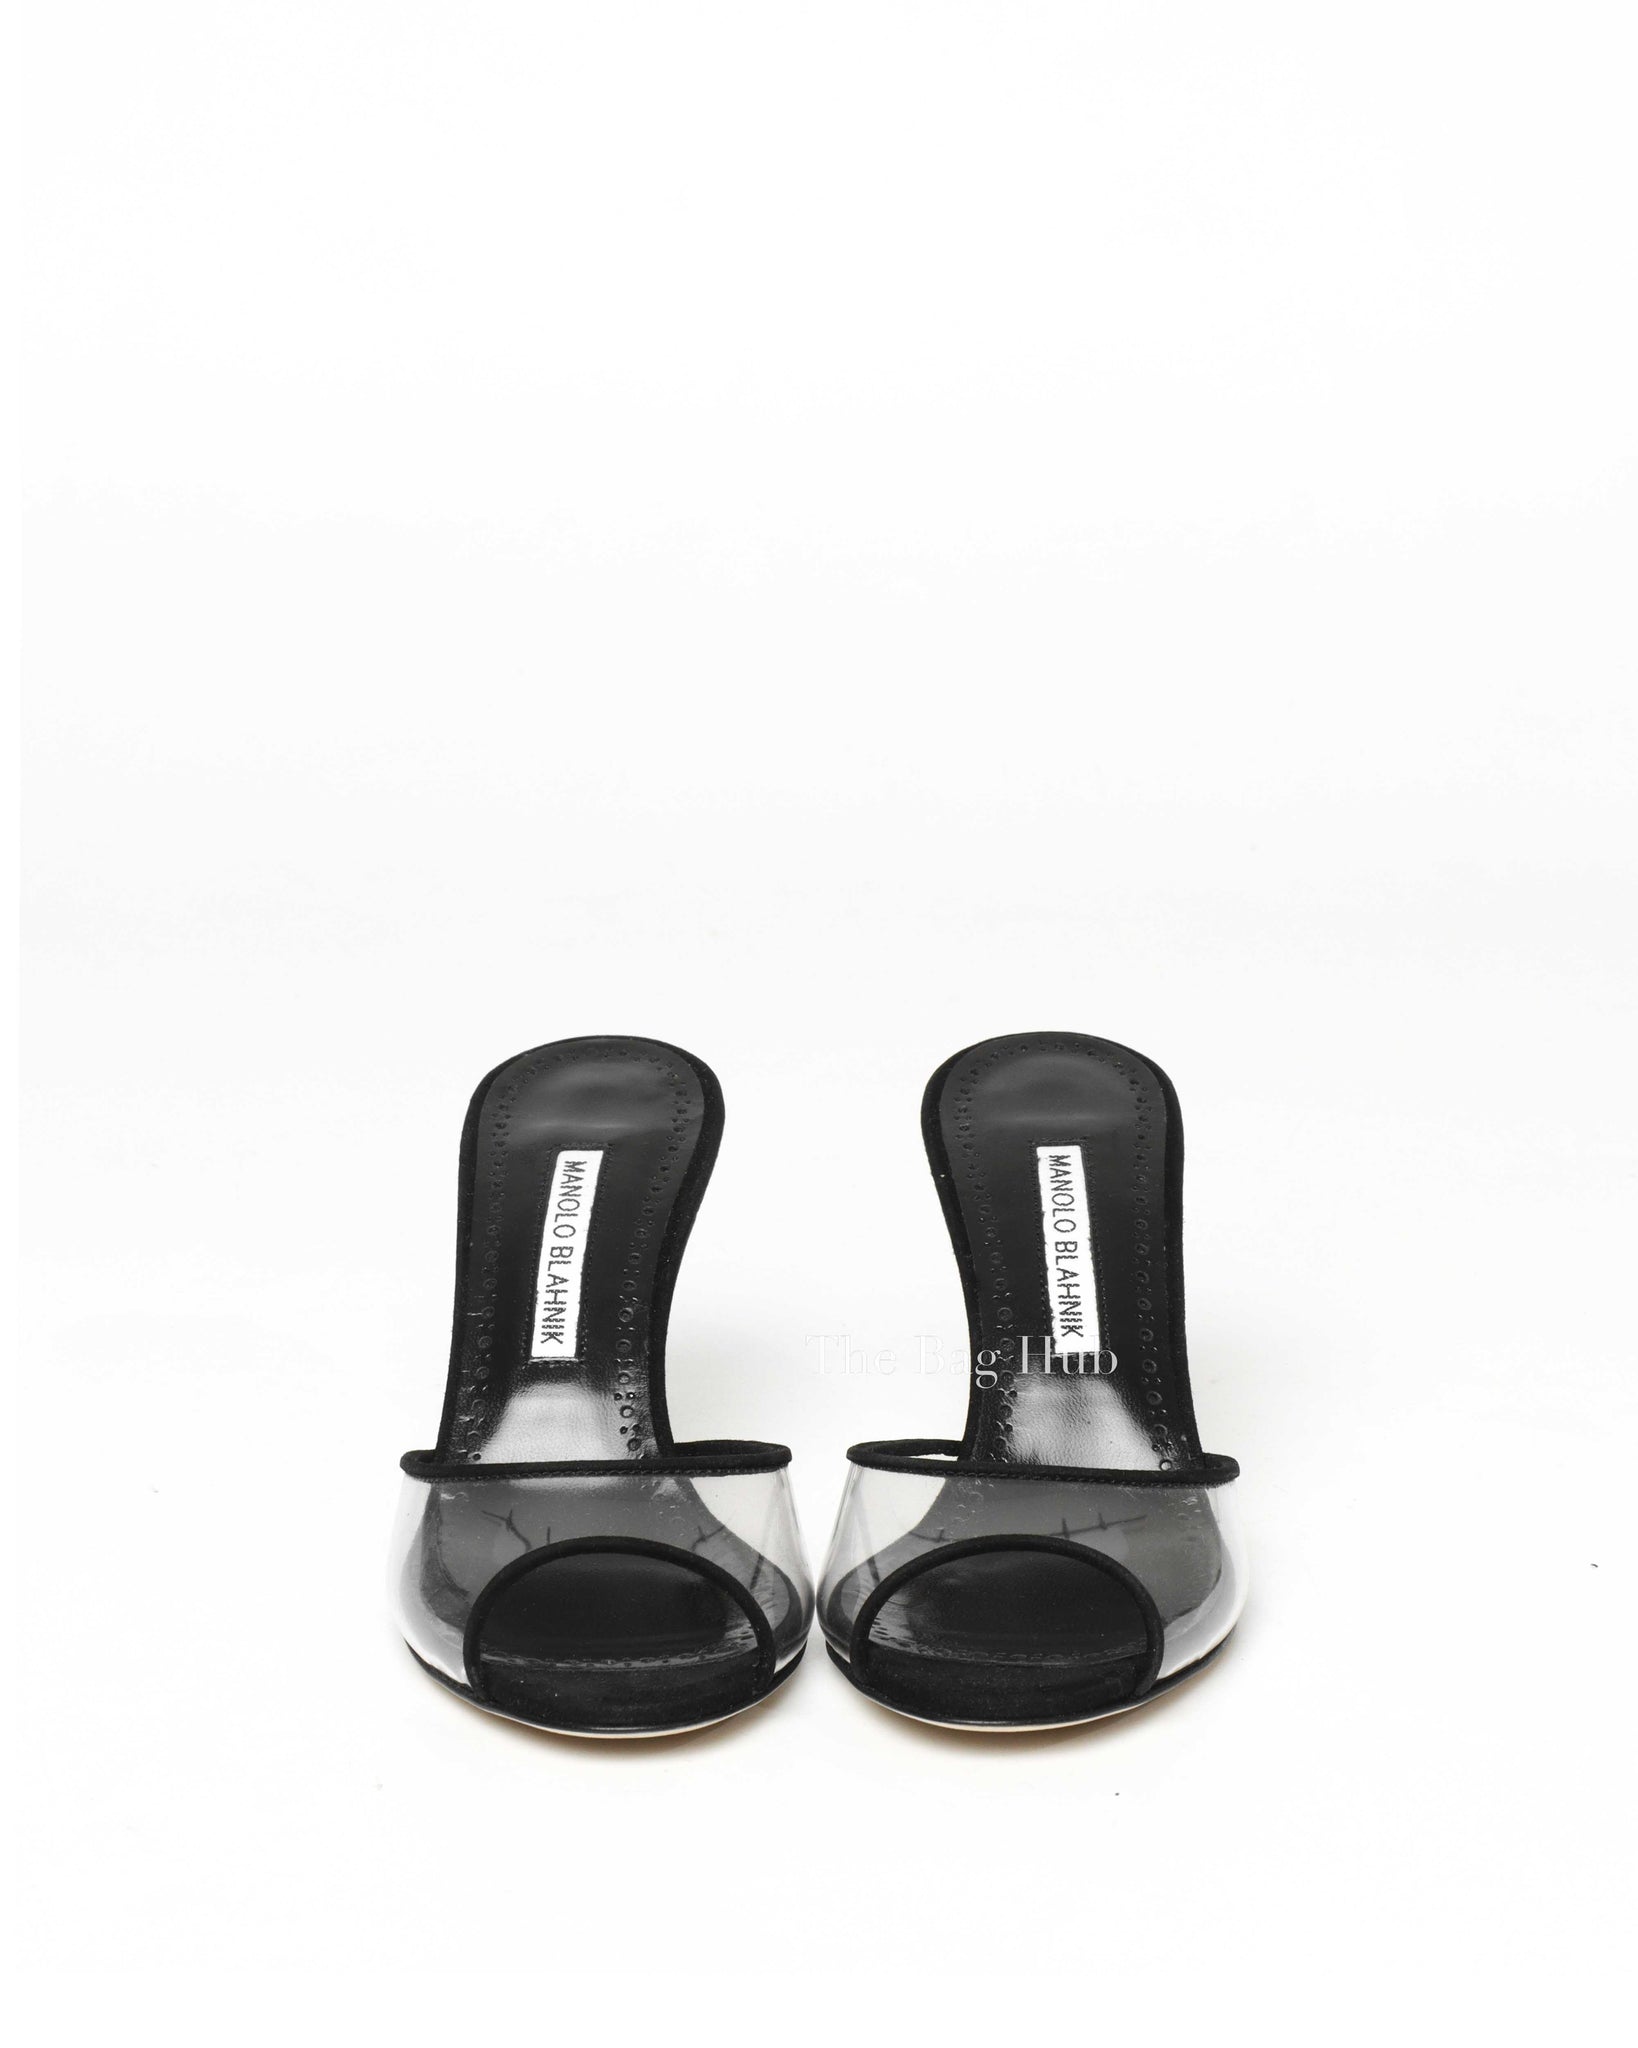 Manolo Blahnik Black Suede Sandals Size 36.5-3